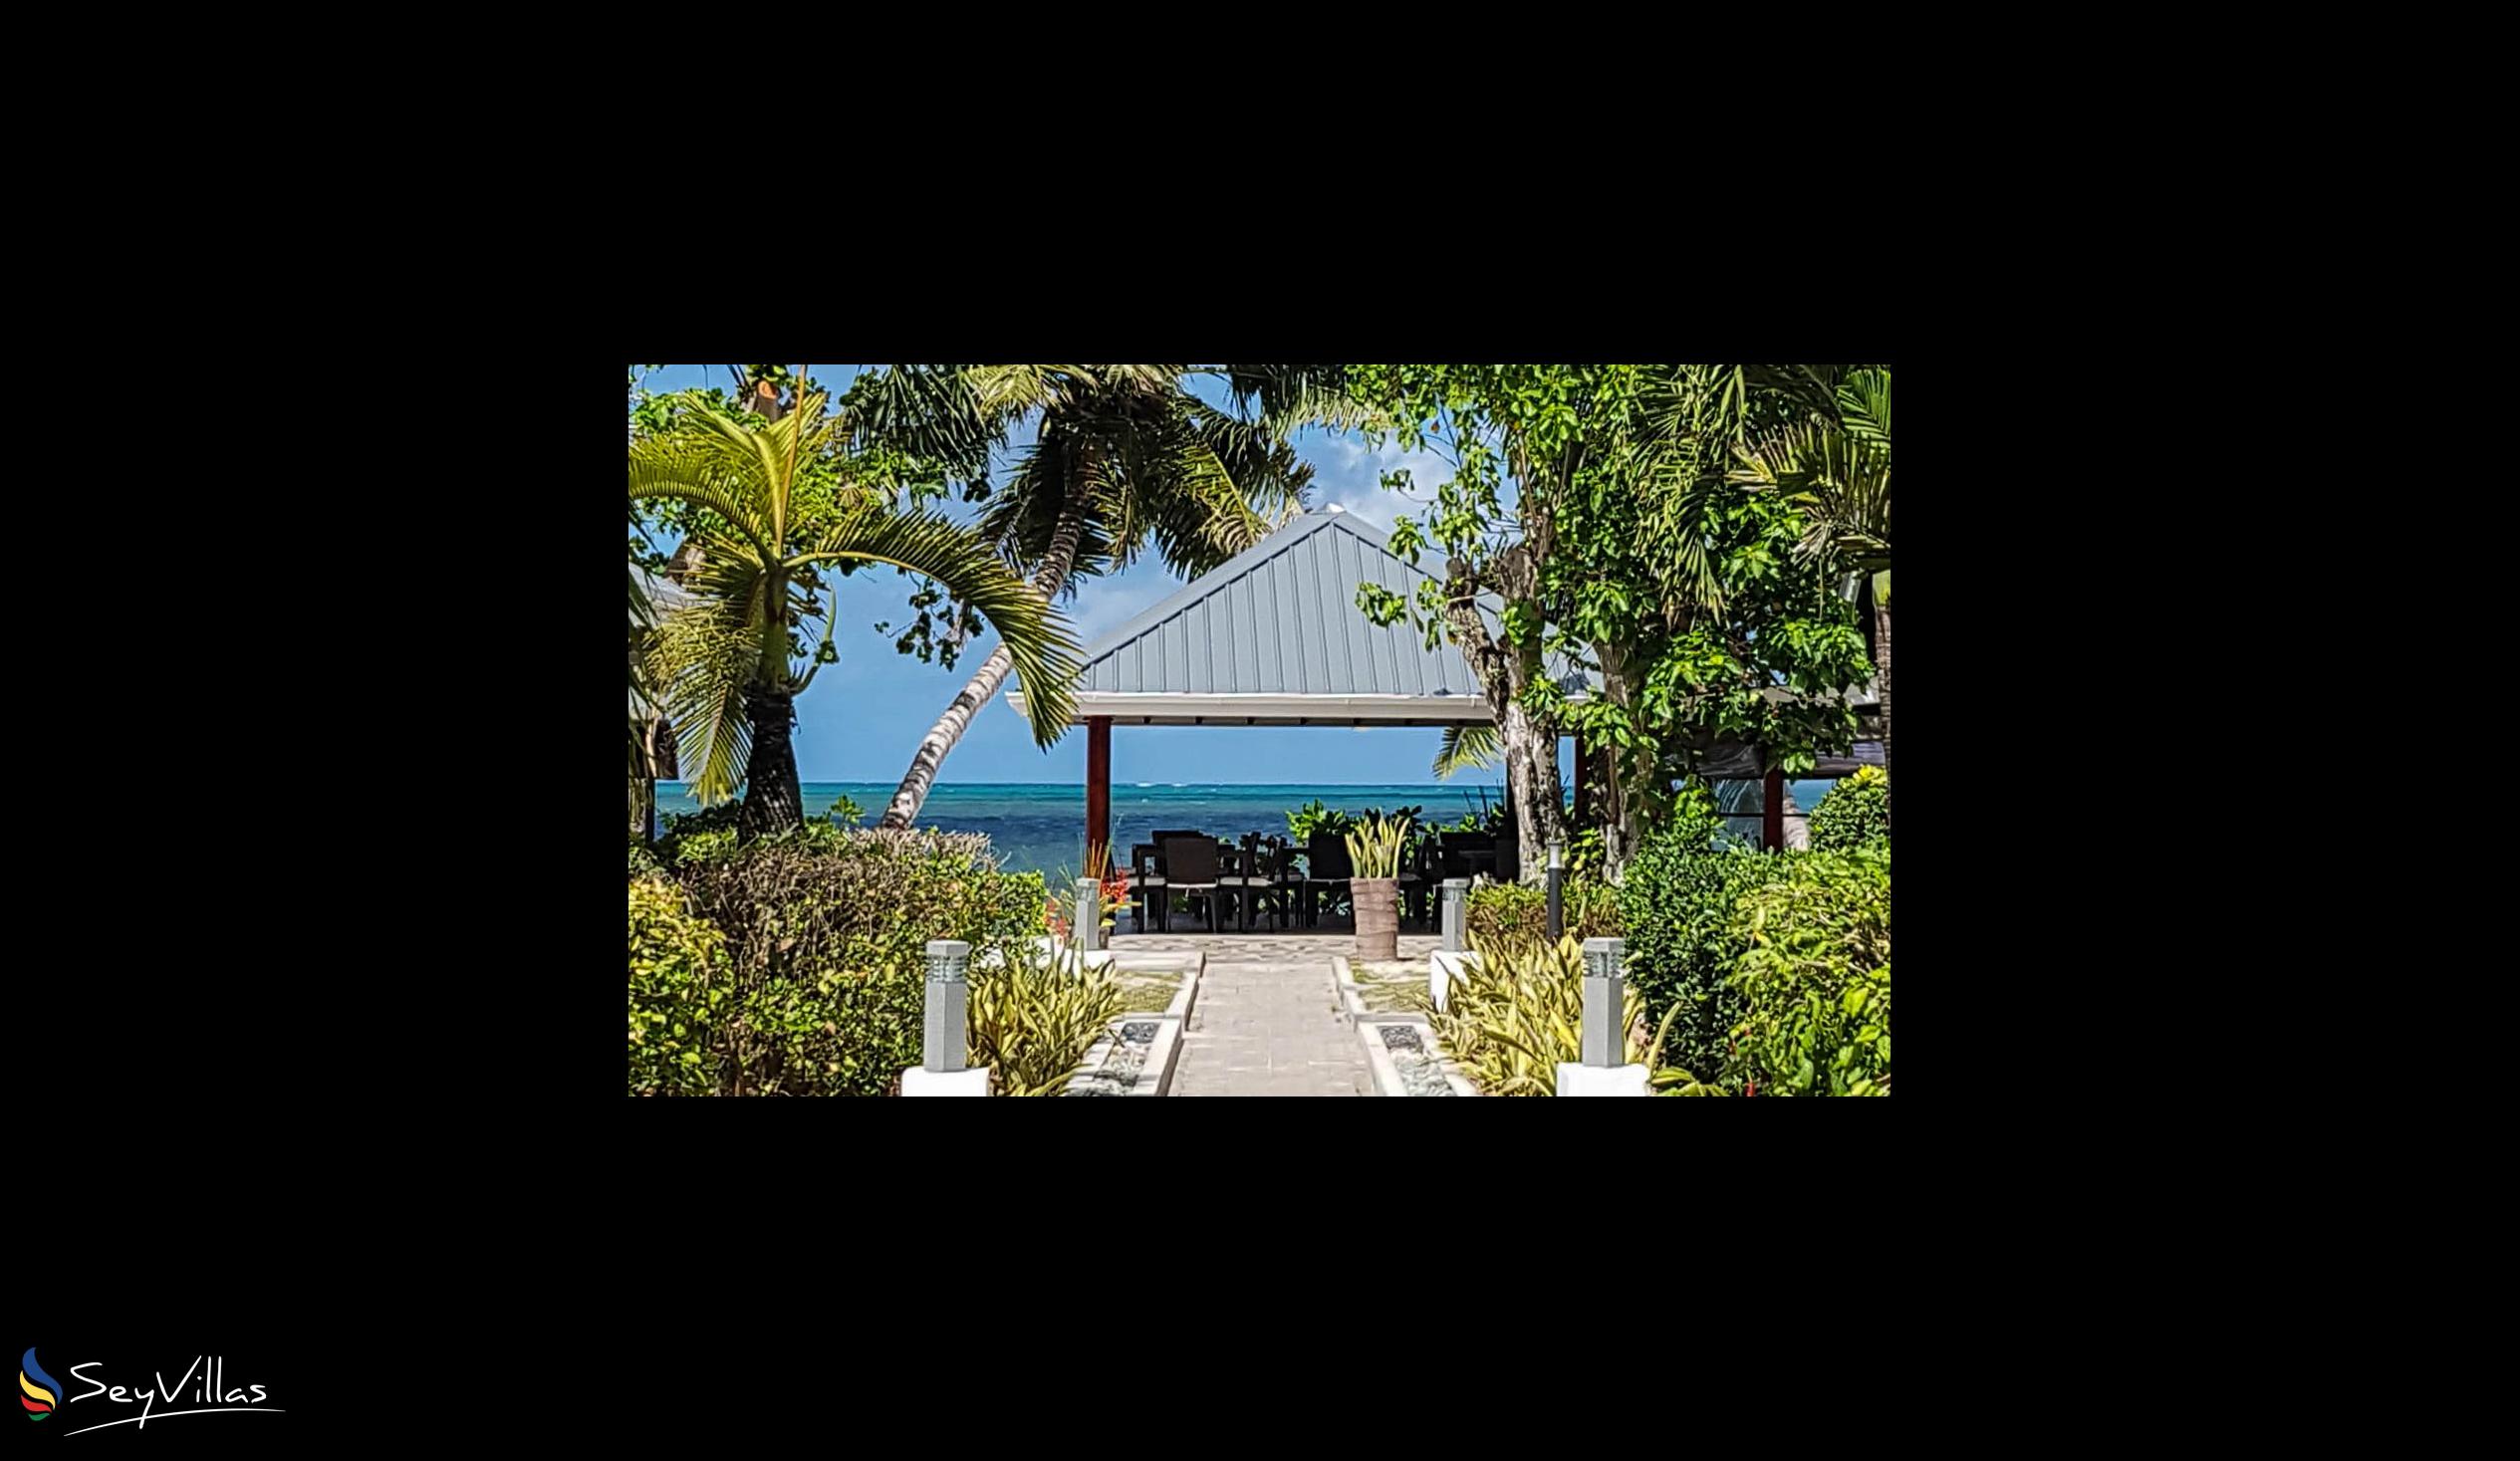 Foto 6: Villas de Mer - Aussenbereich - Praslin (Seychellen)